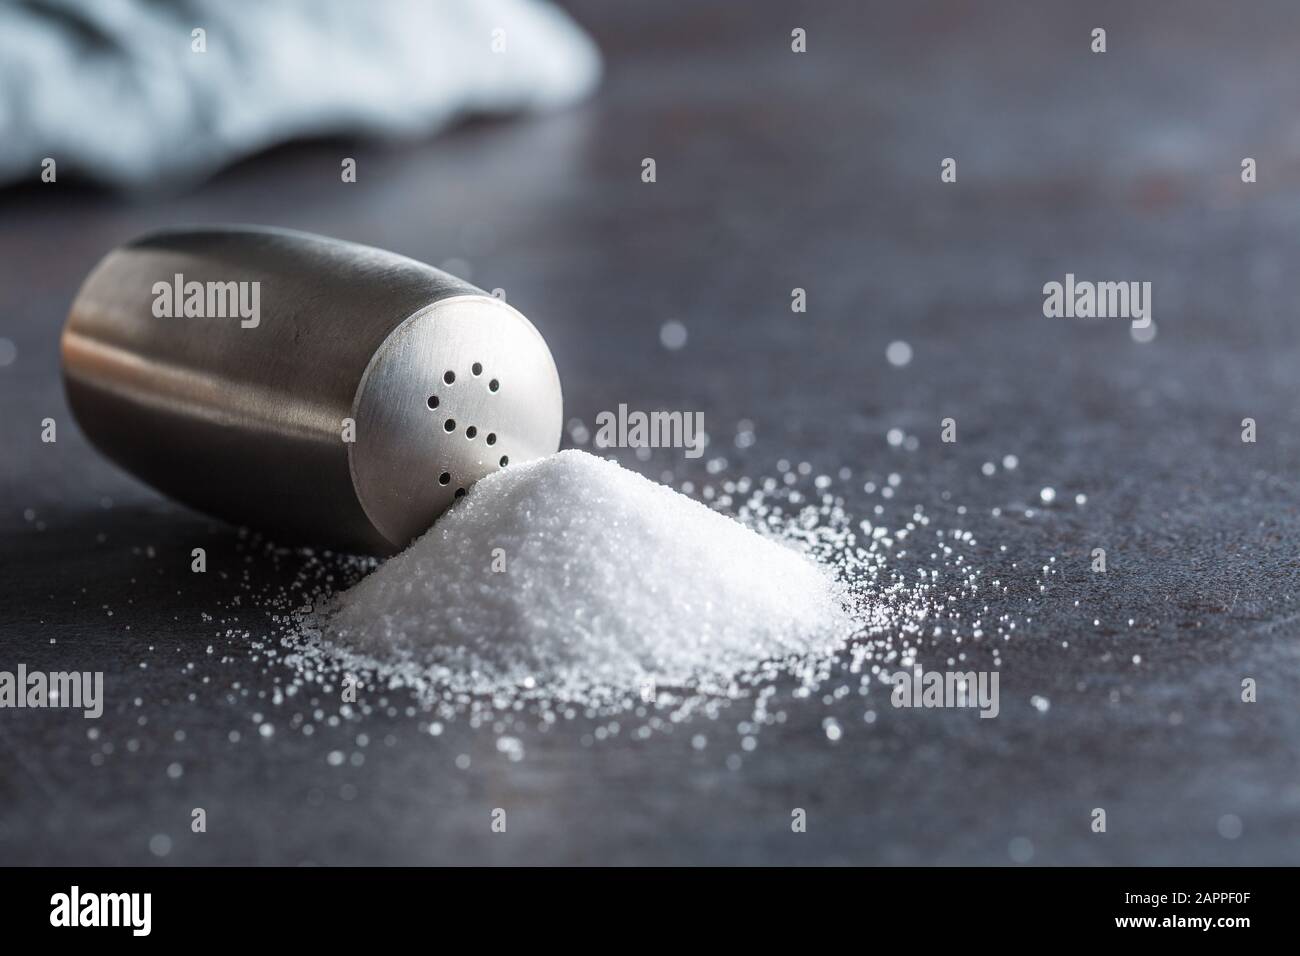 Spilled salt with staniless salt shaker - Closeup Stock Photo